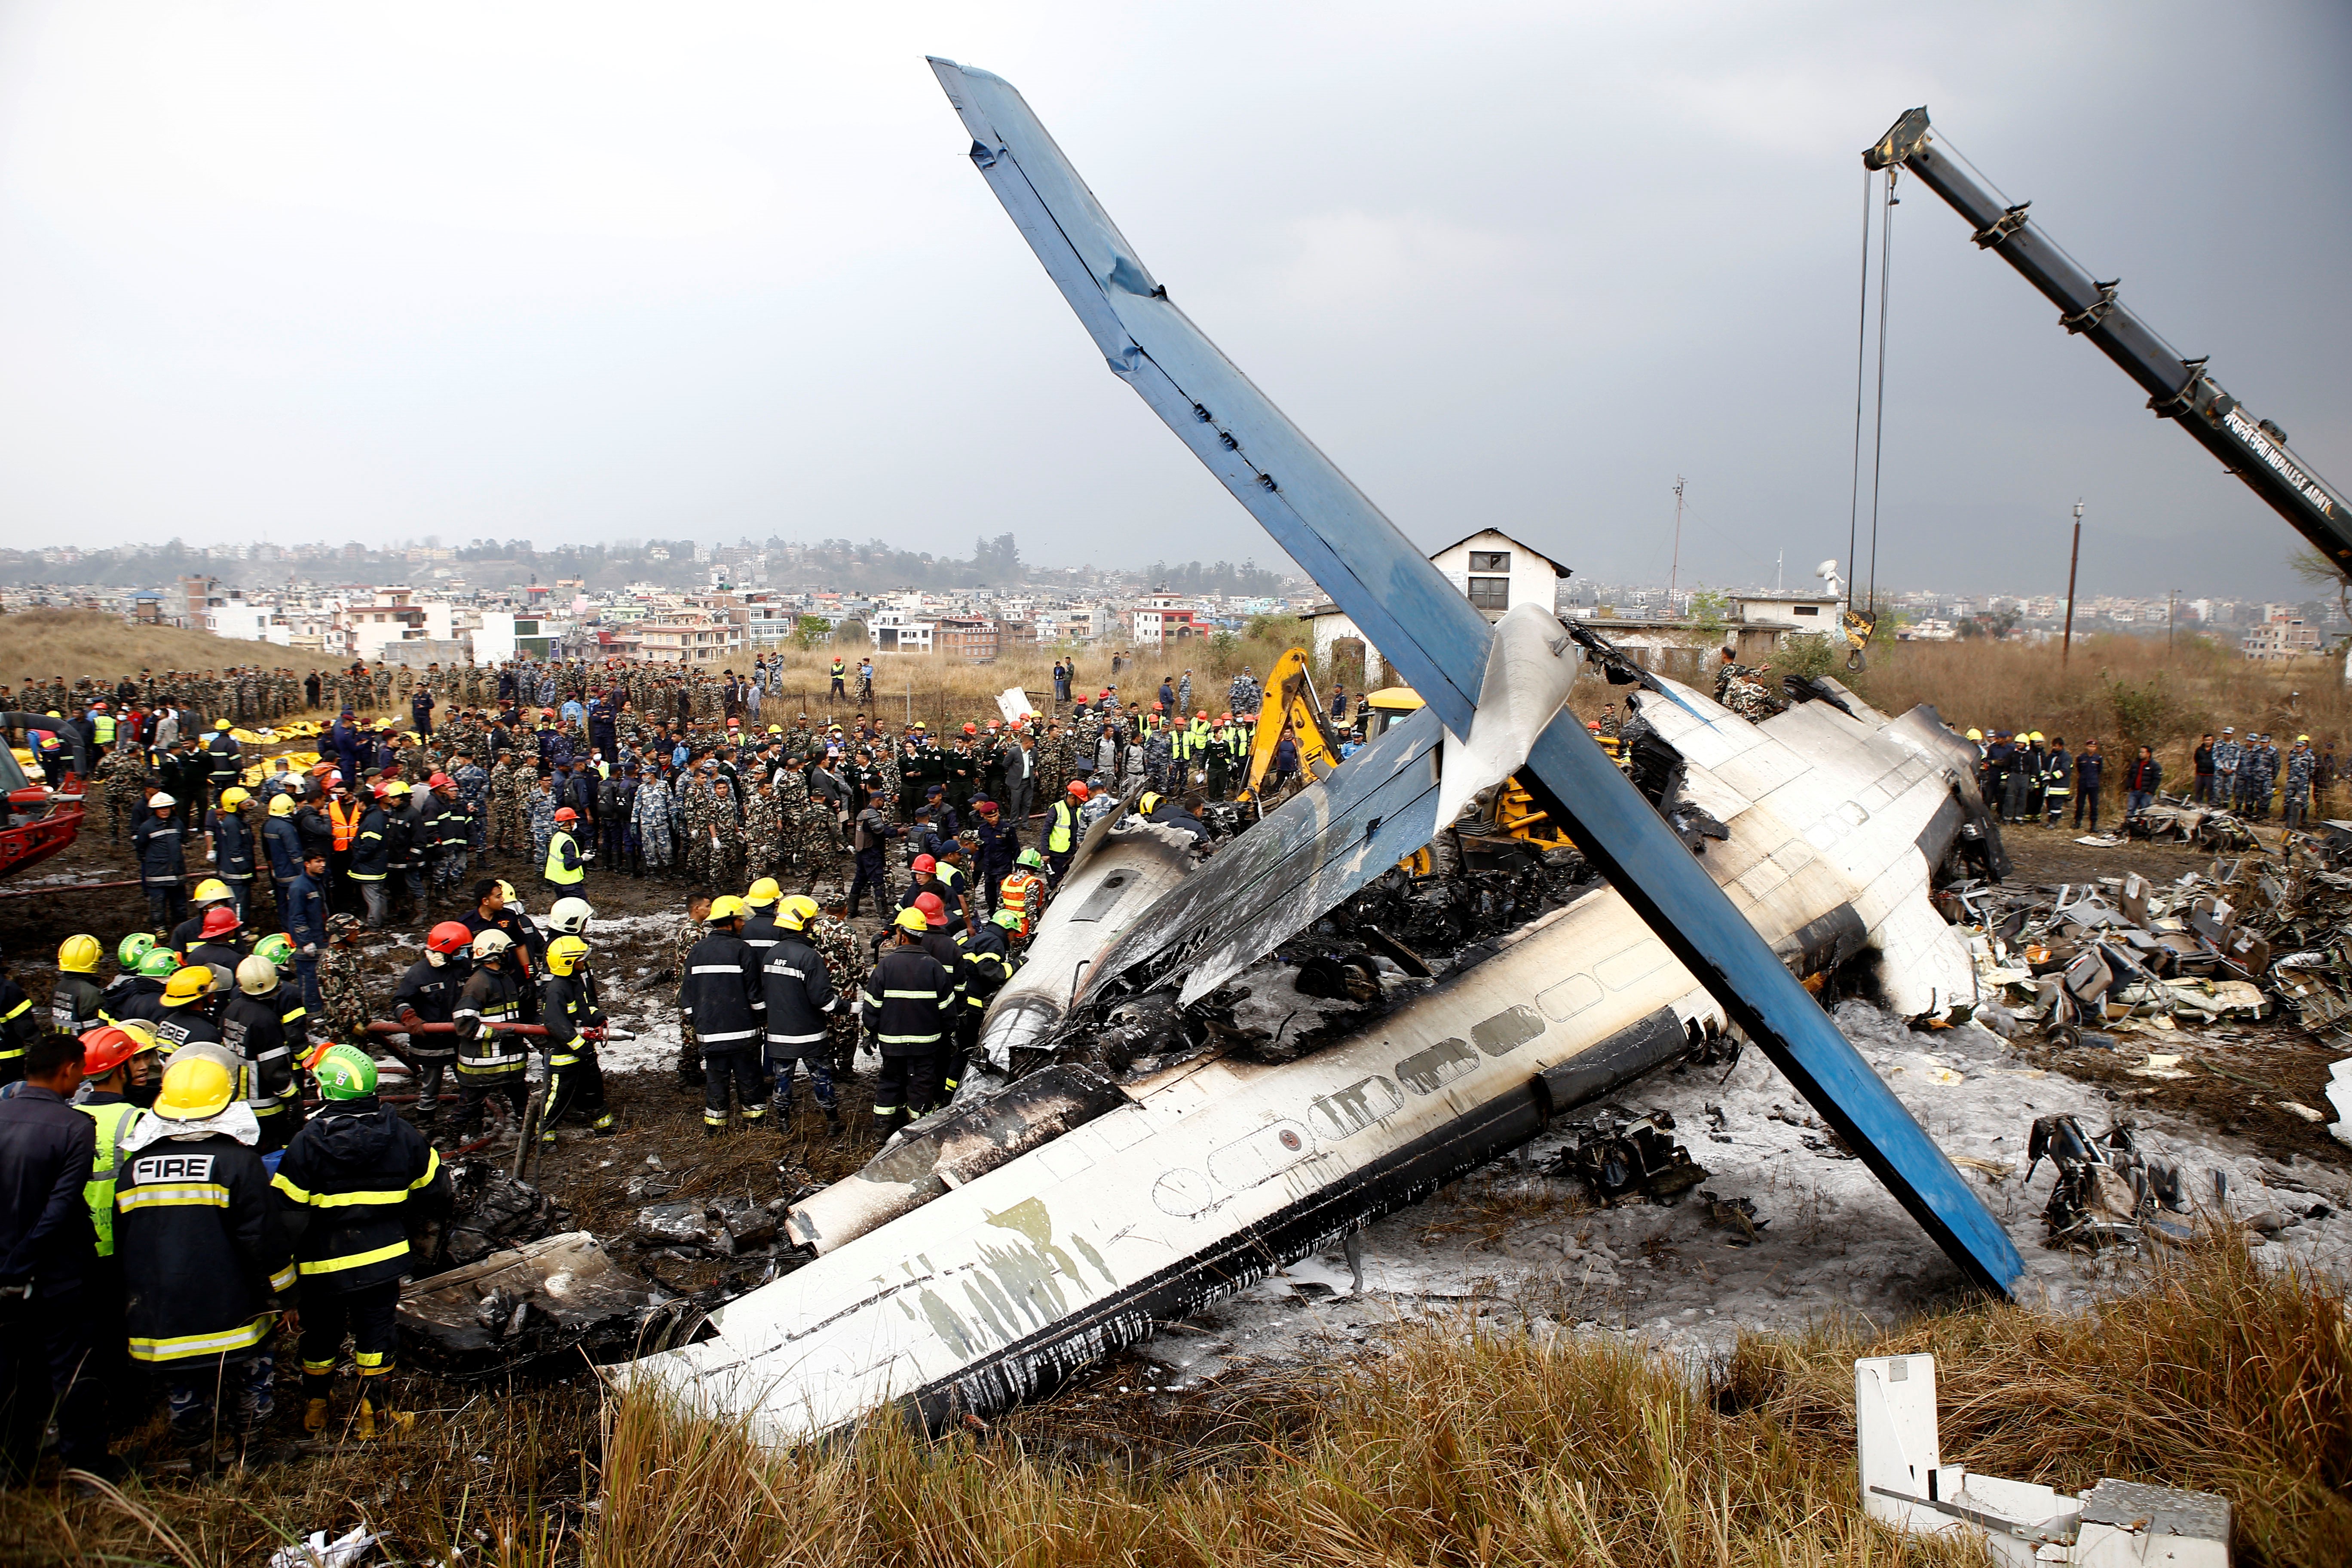 Dozens dead in Nepal plane crash